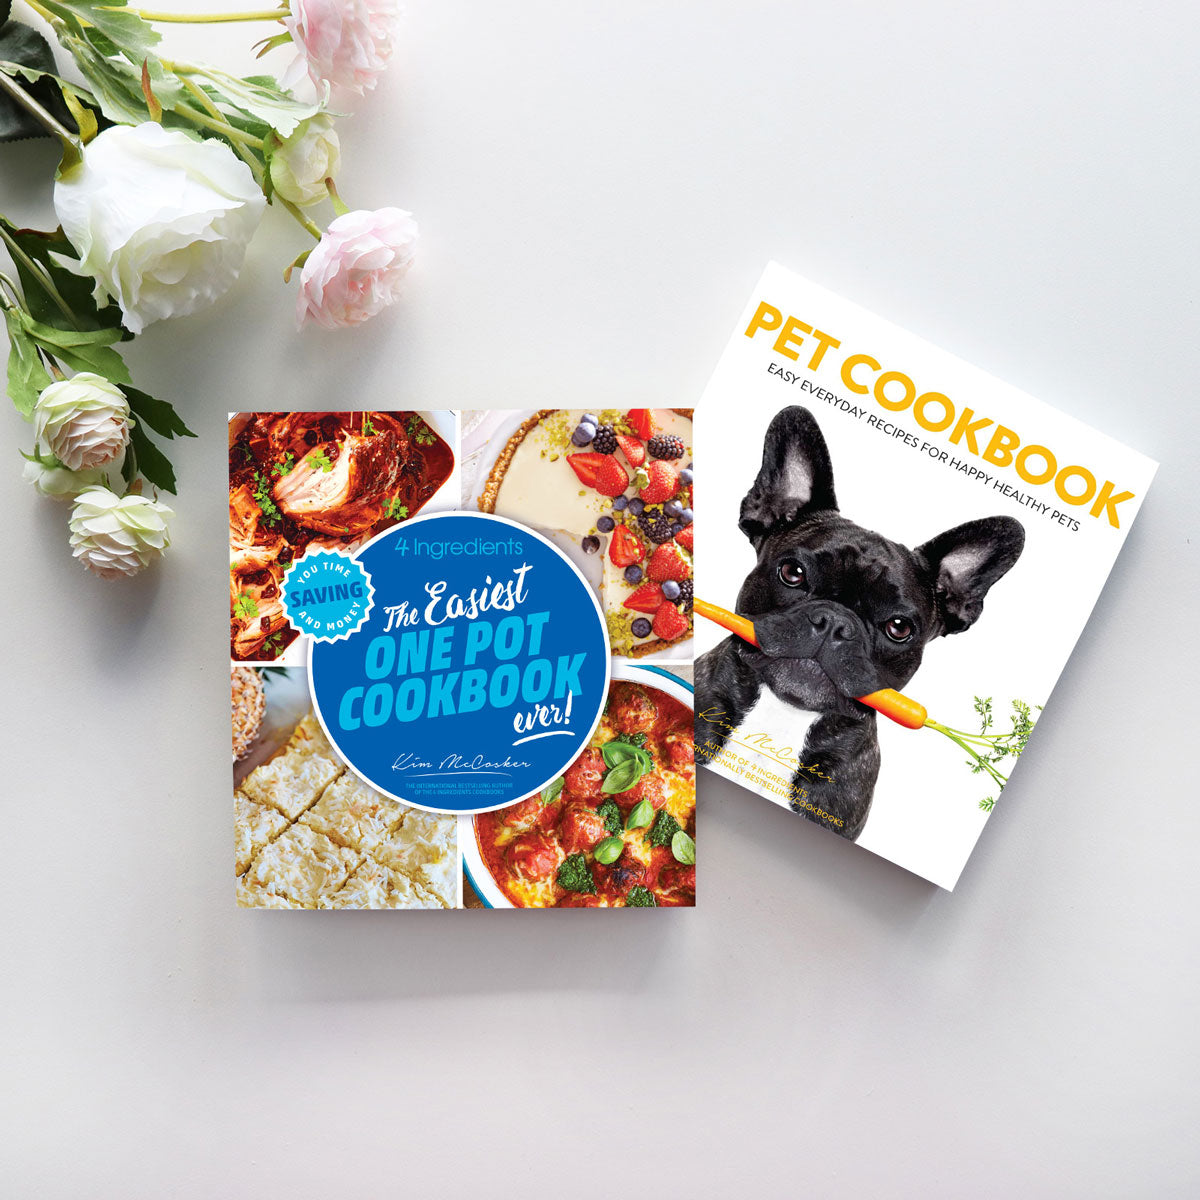 4 Ingredients The Easiest One Pot Cookbook ever + Pet Cookbook